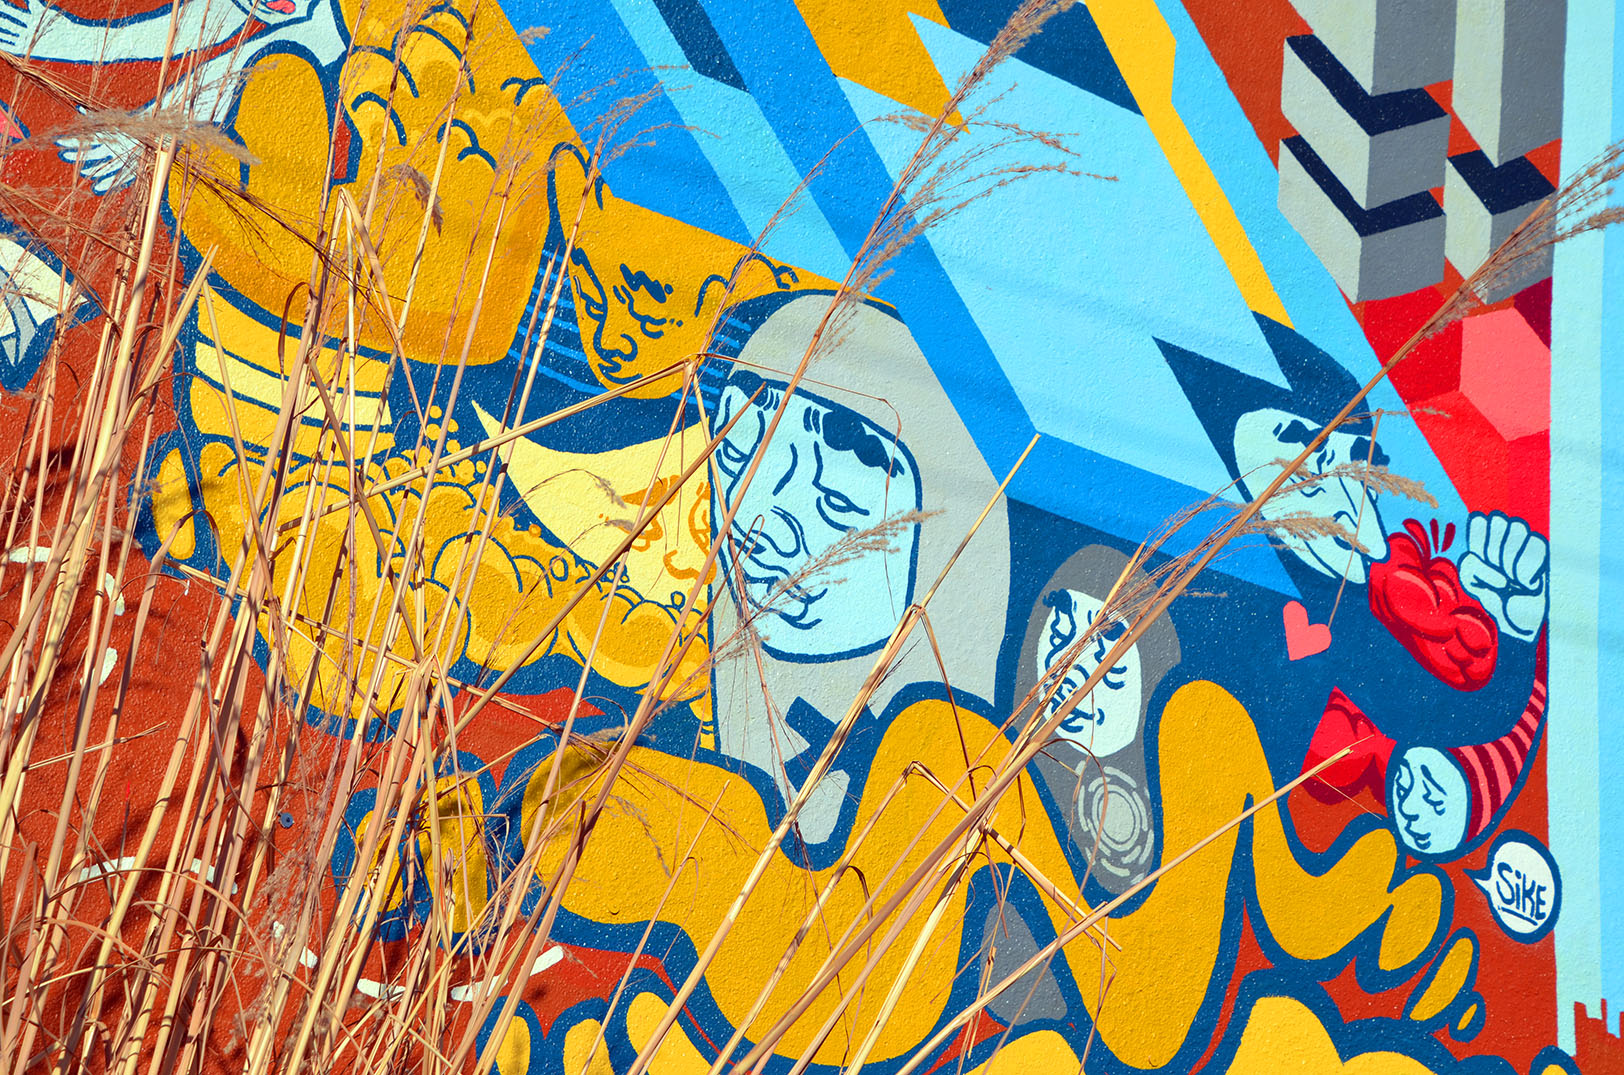 Murals by Sike Style, JT Daniels paint ‘One KC’ across state line, Plexpod locations